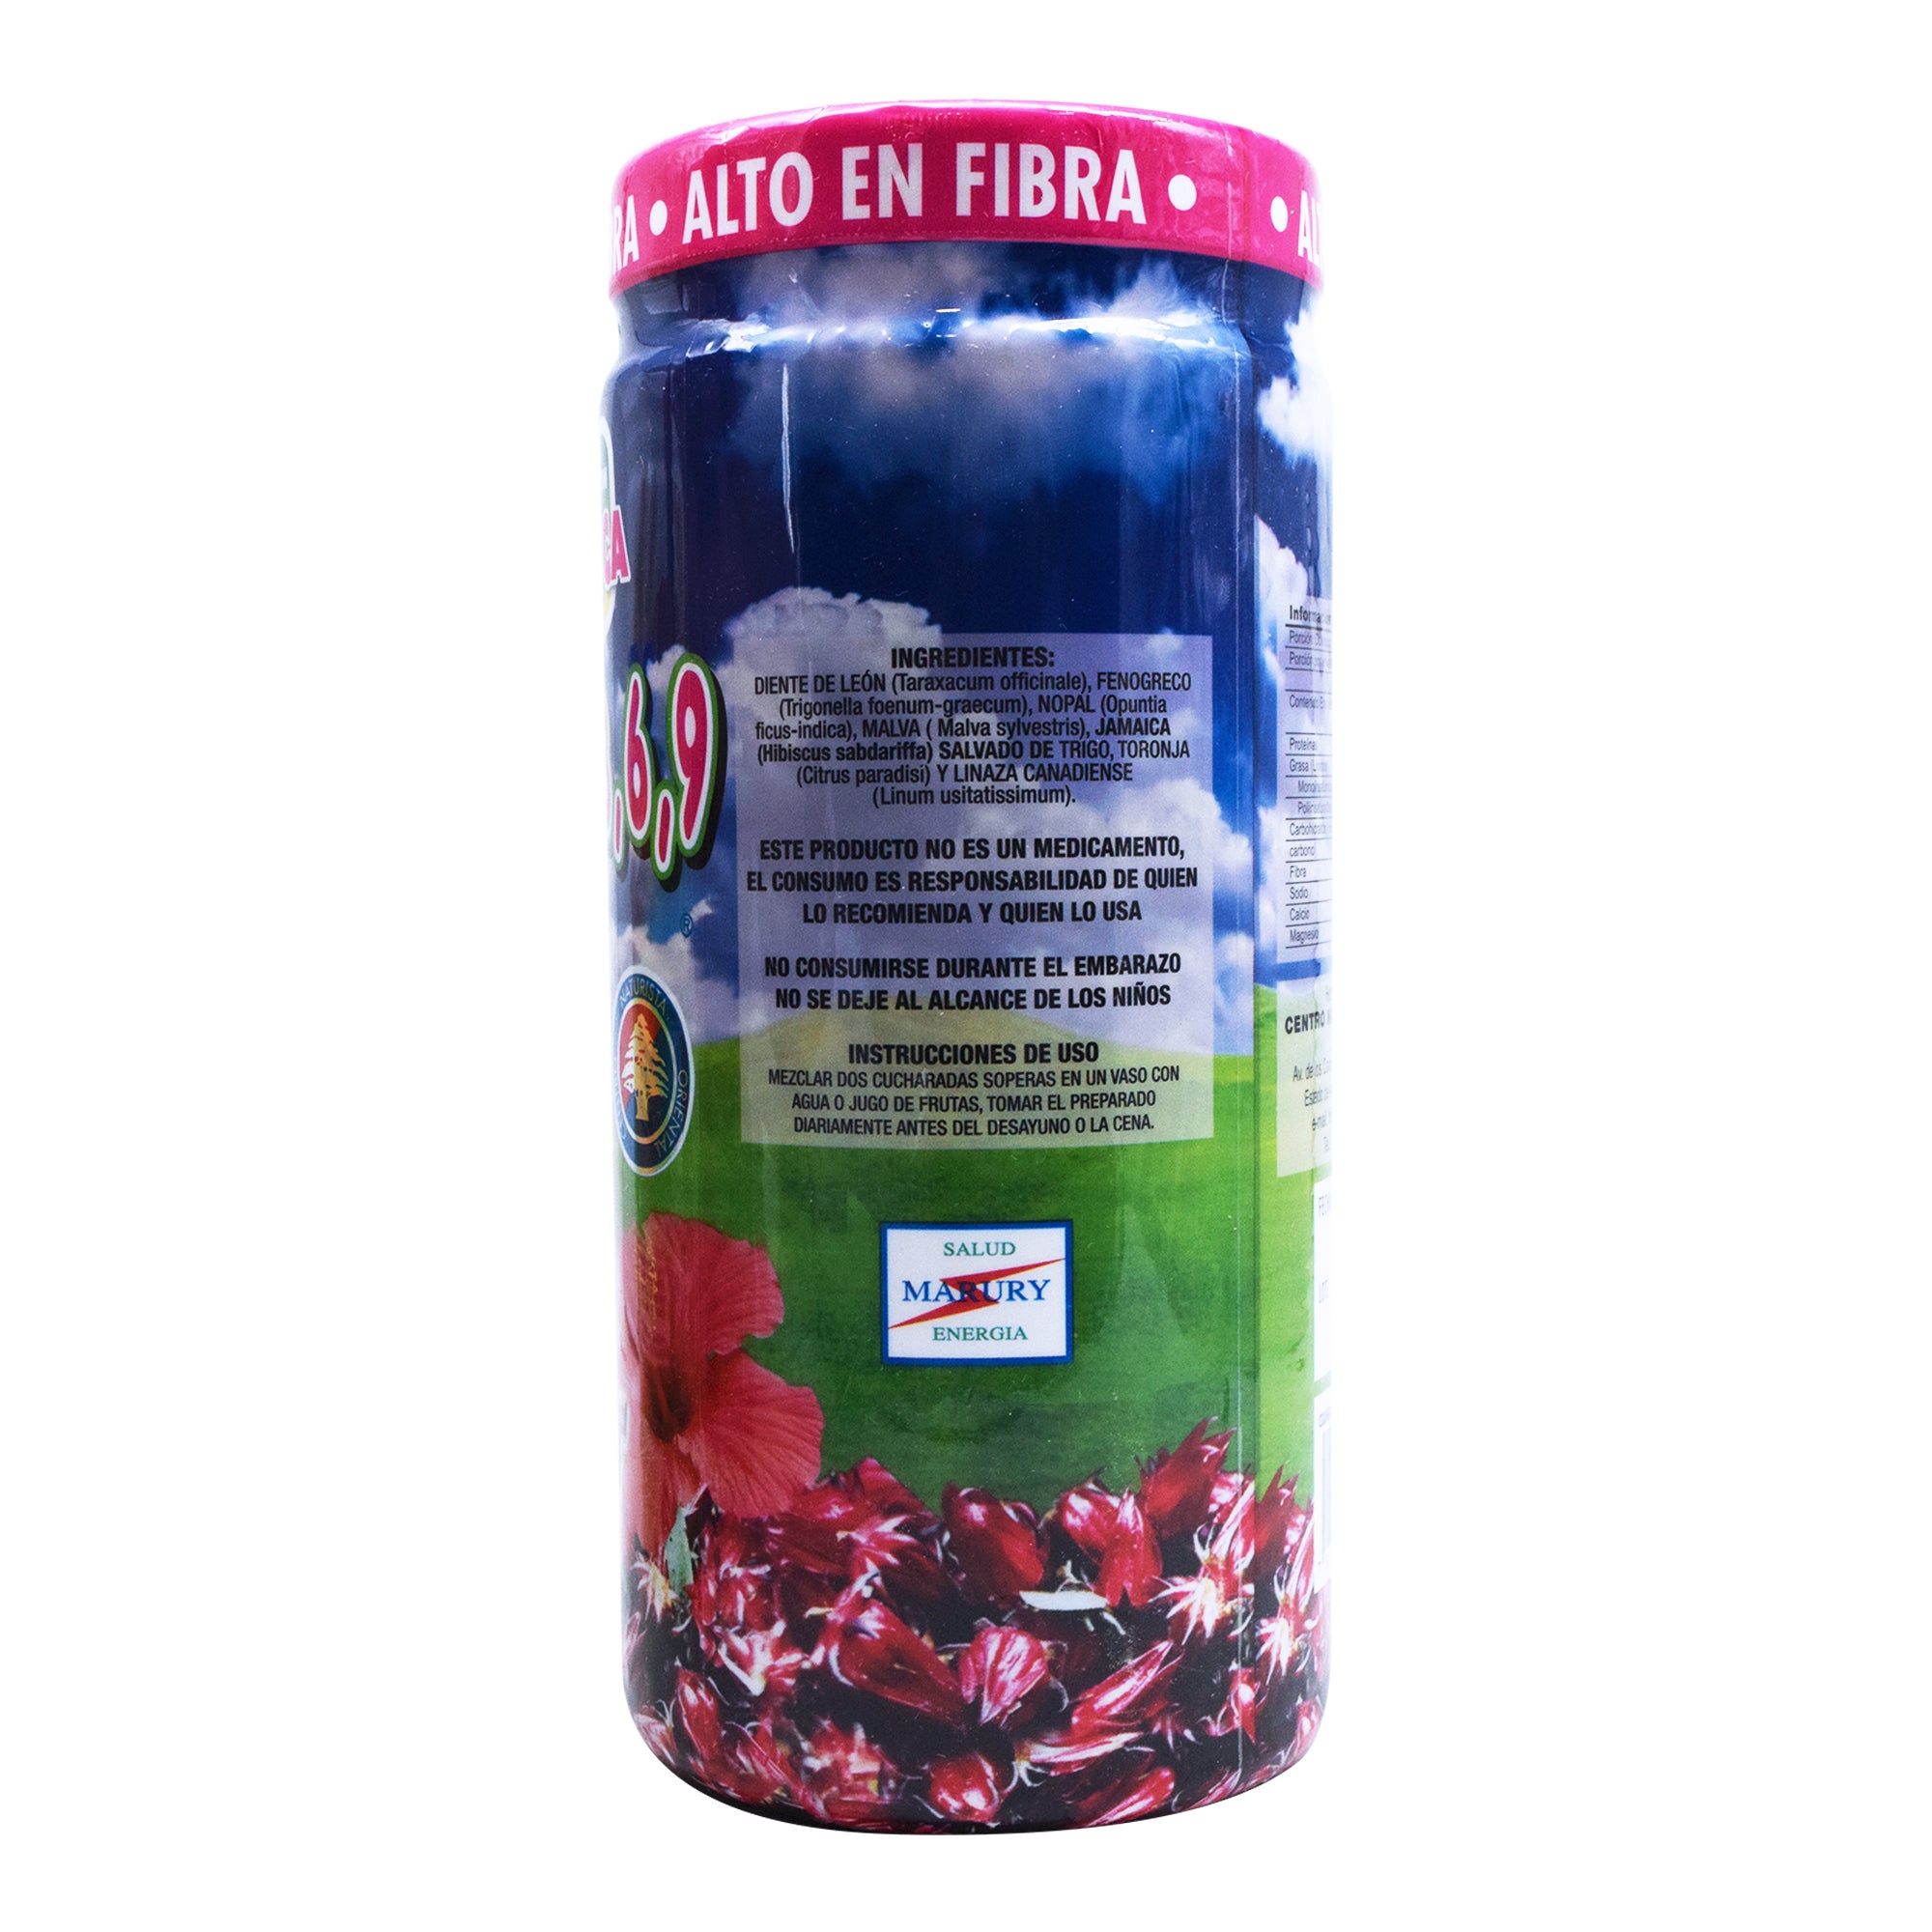 Fibra hiperlinafruit jamaica 500 g